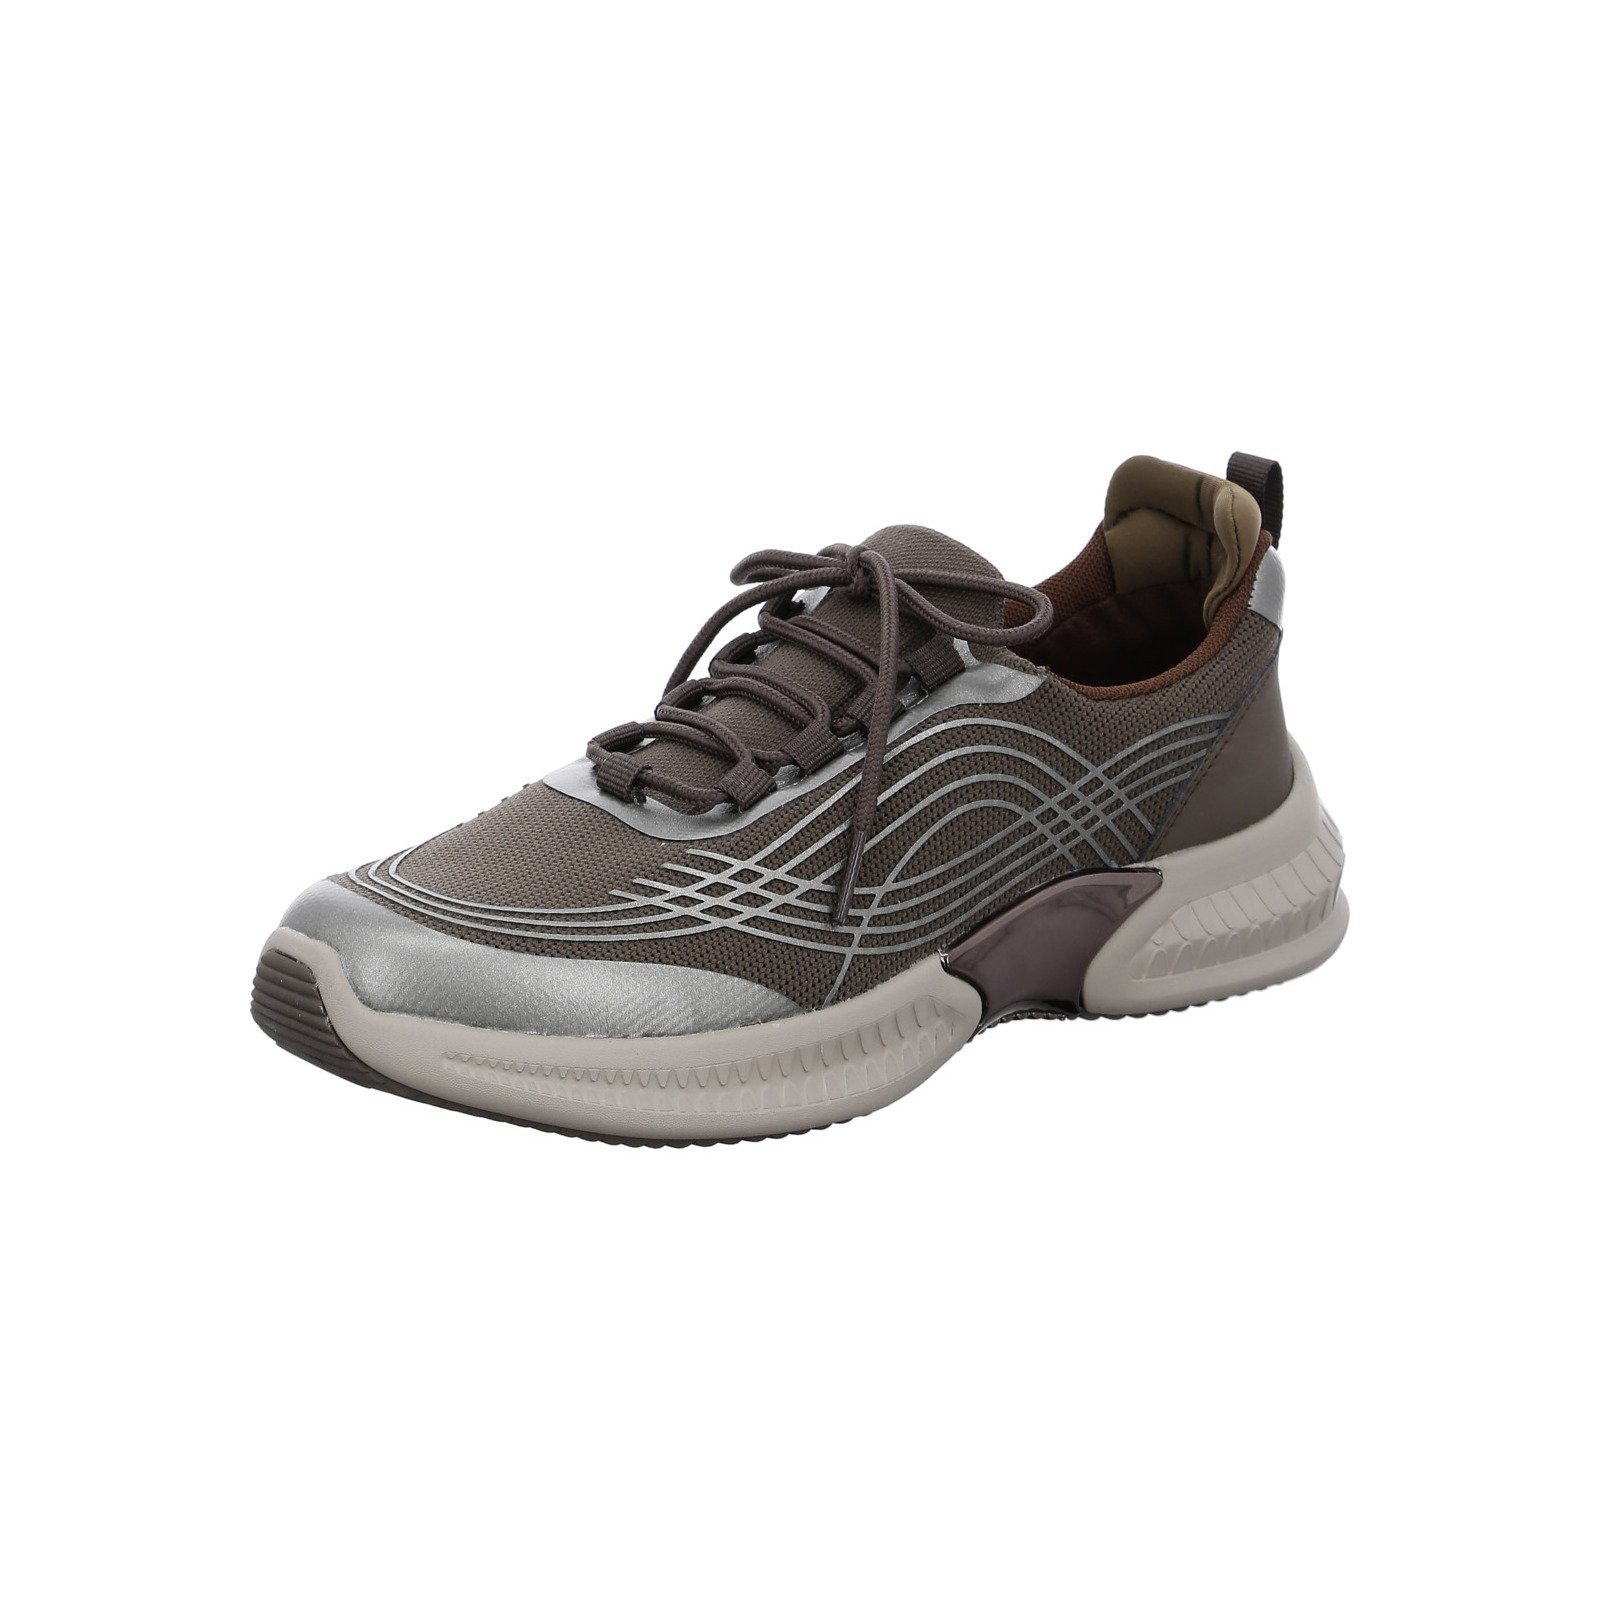 Ara Athen - Damen Schuhe Schnürschuh grau